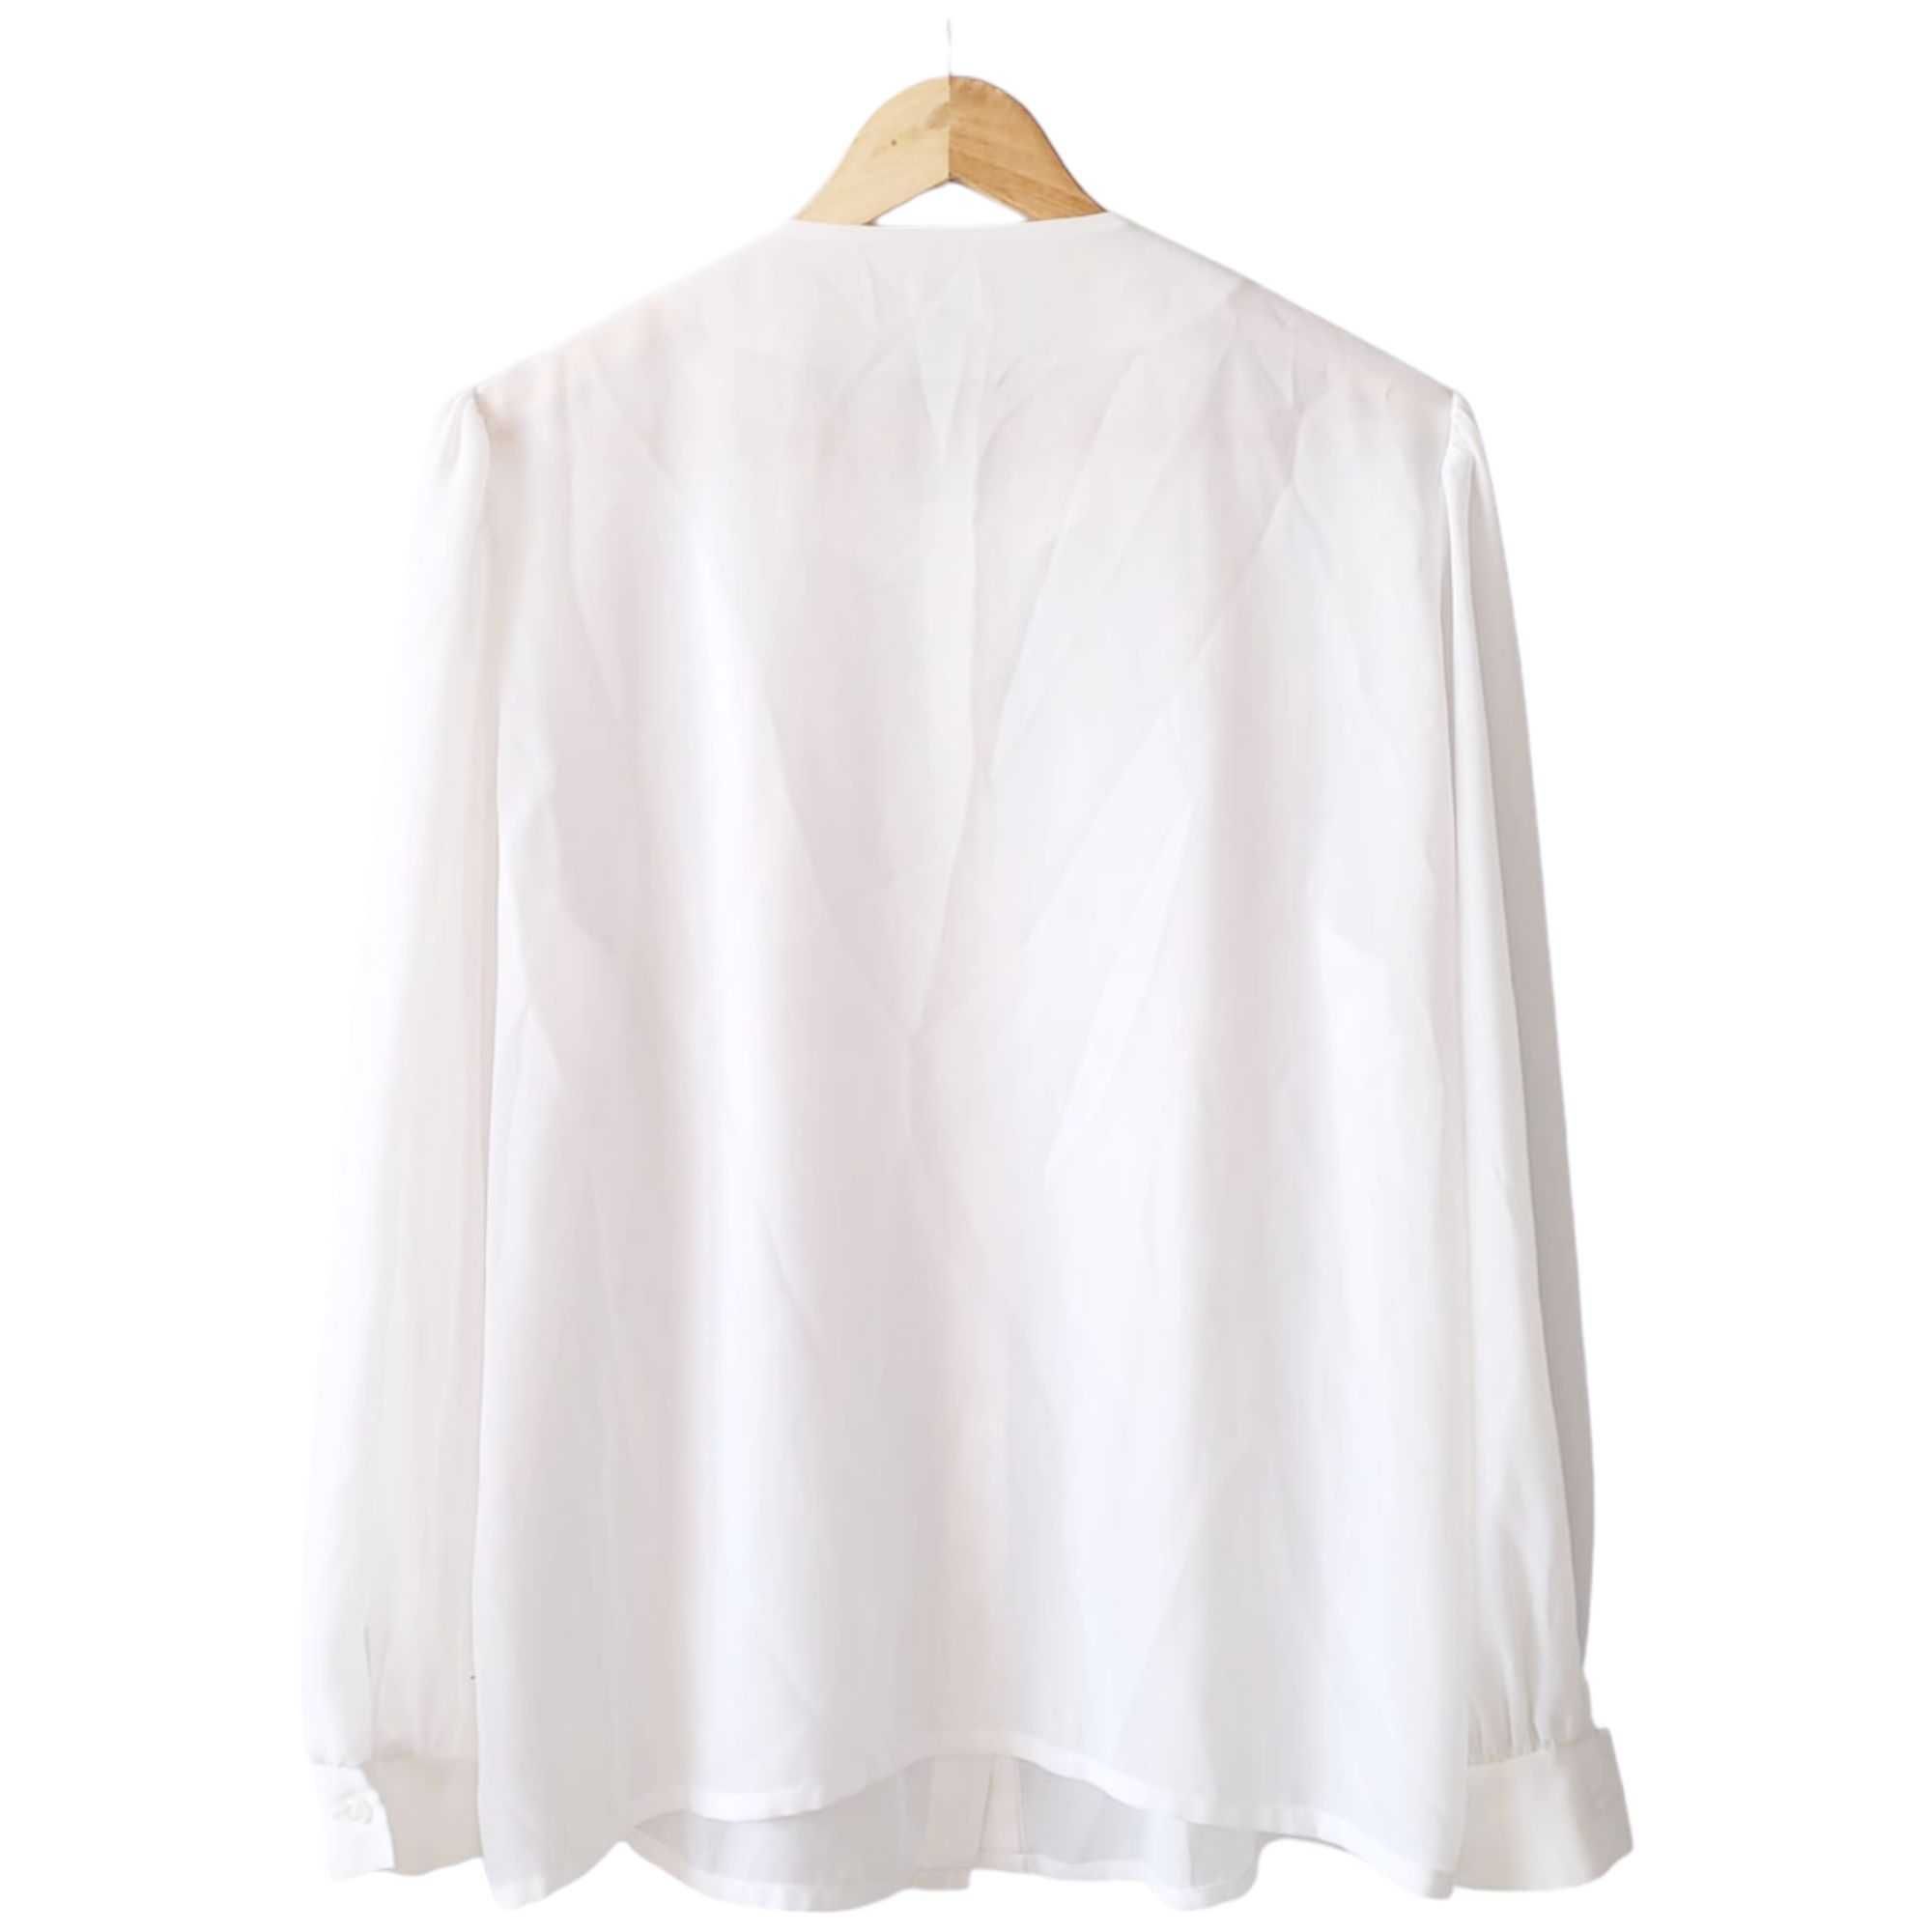 Biała koszula damska vintage szyfonowa L XL Tara lata 80. bluzka